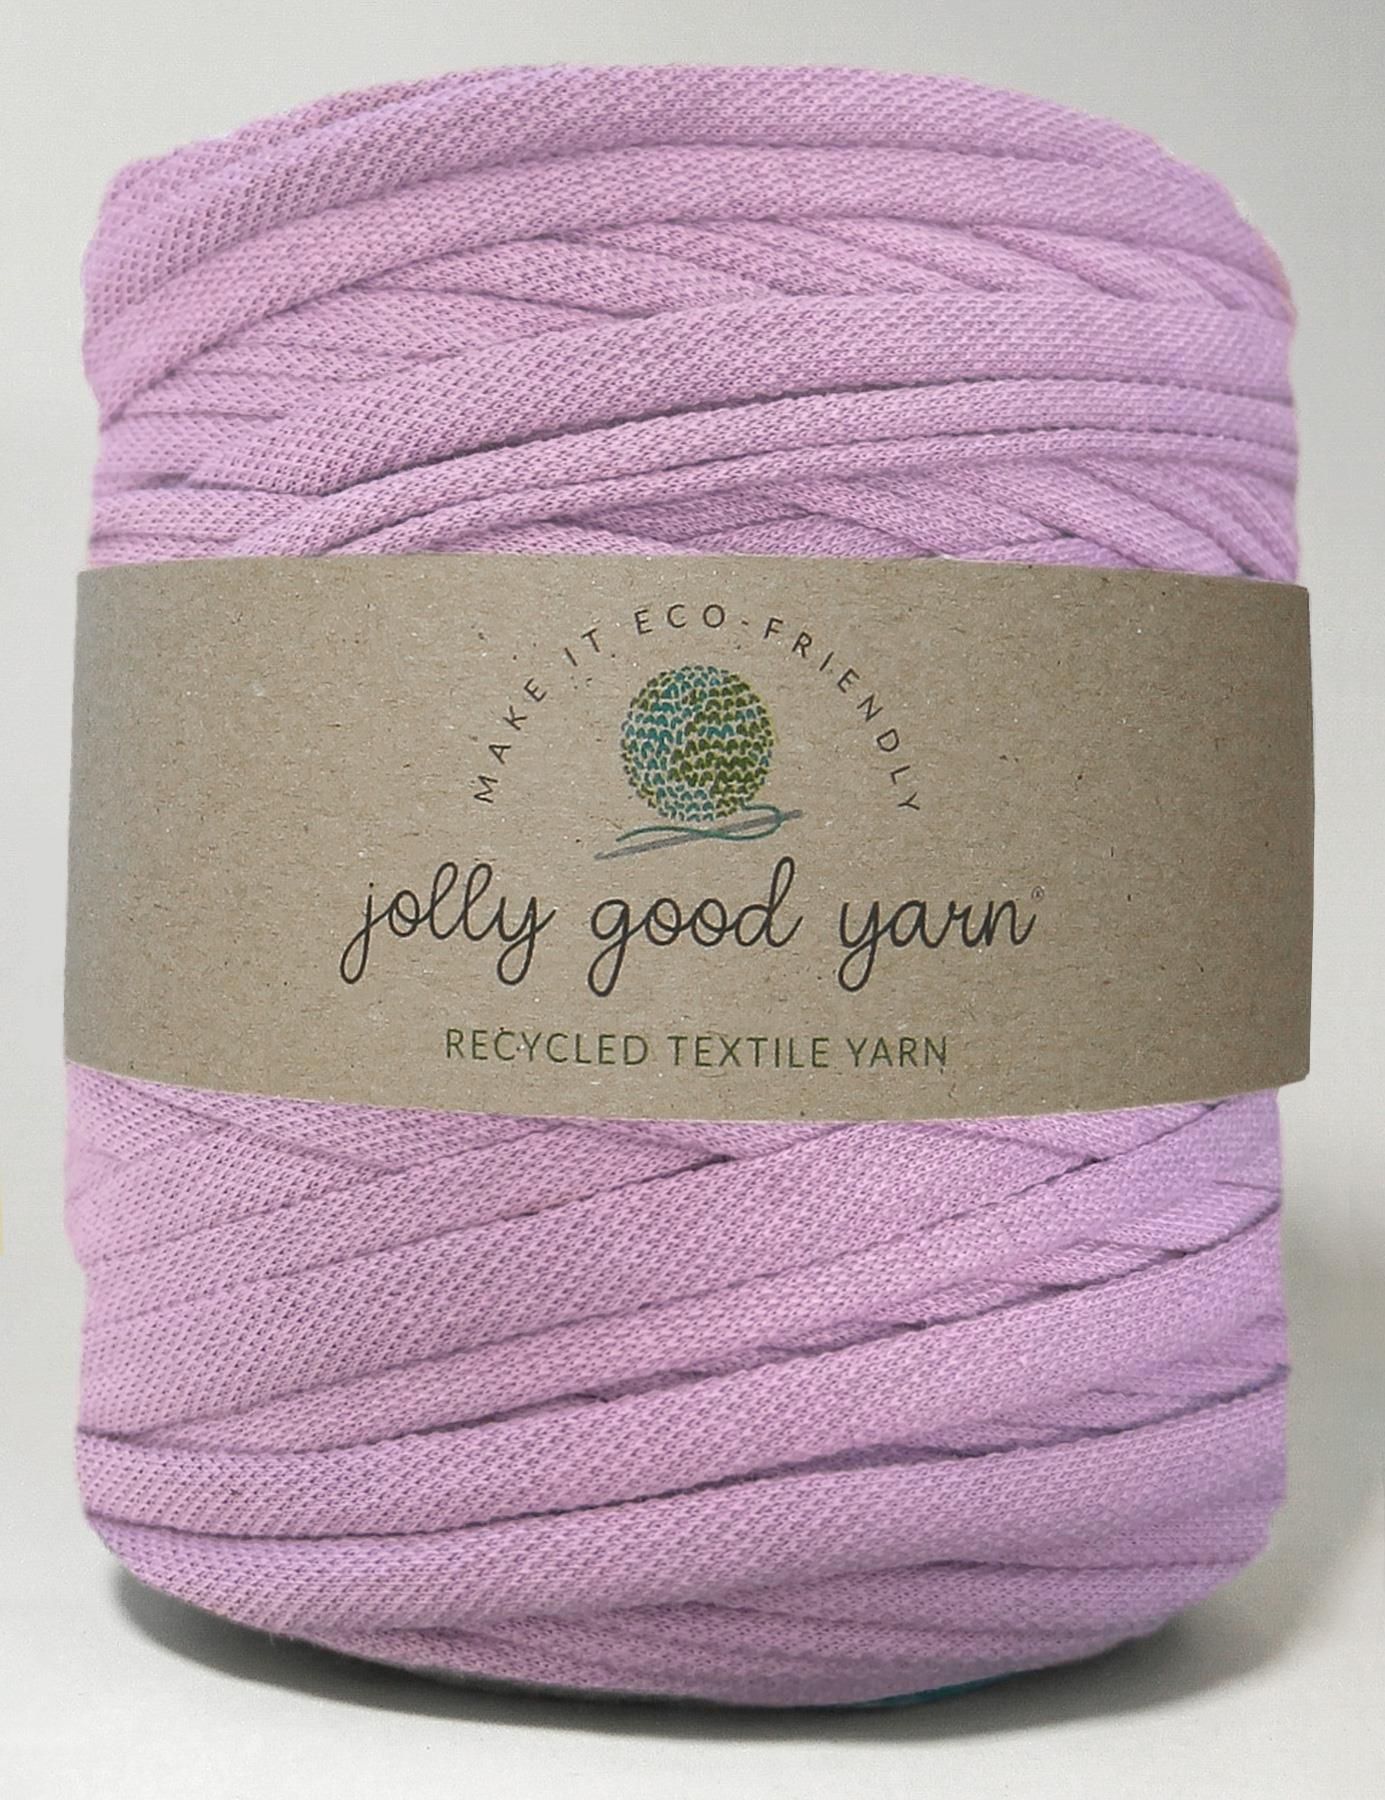 Polo lilac t-shirt yarn (100-120m)